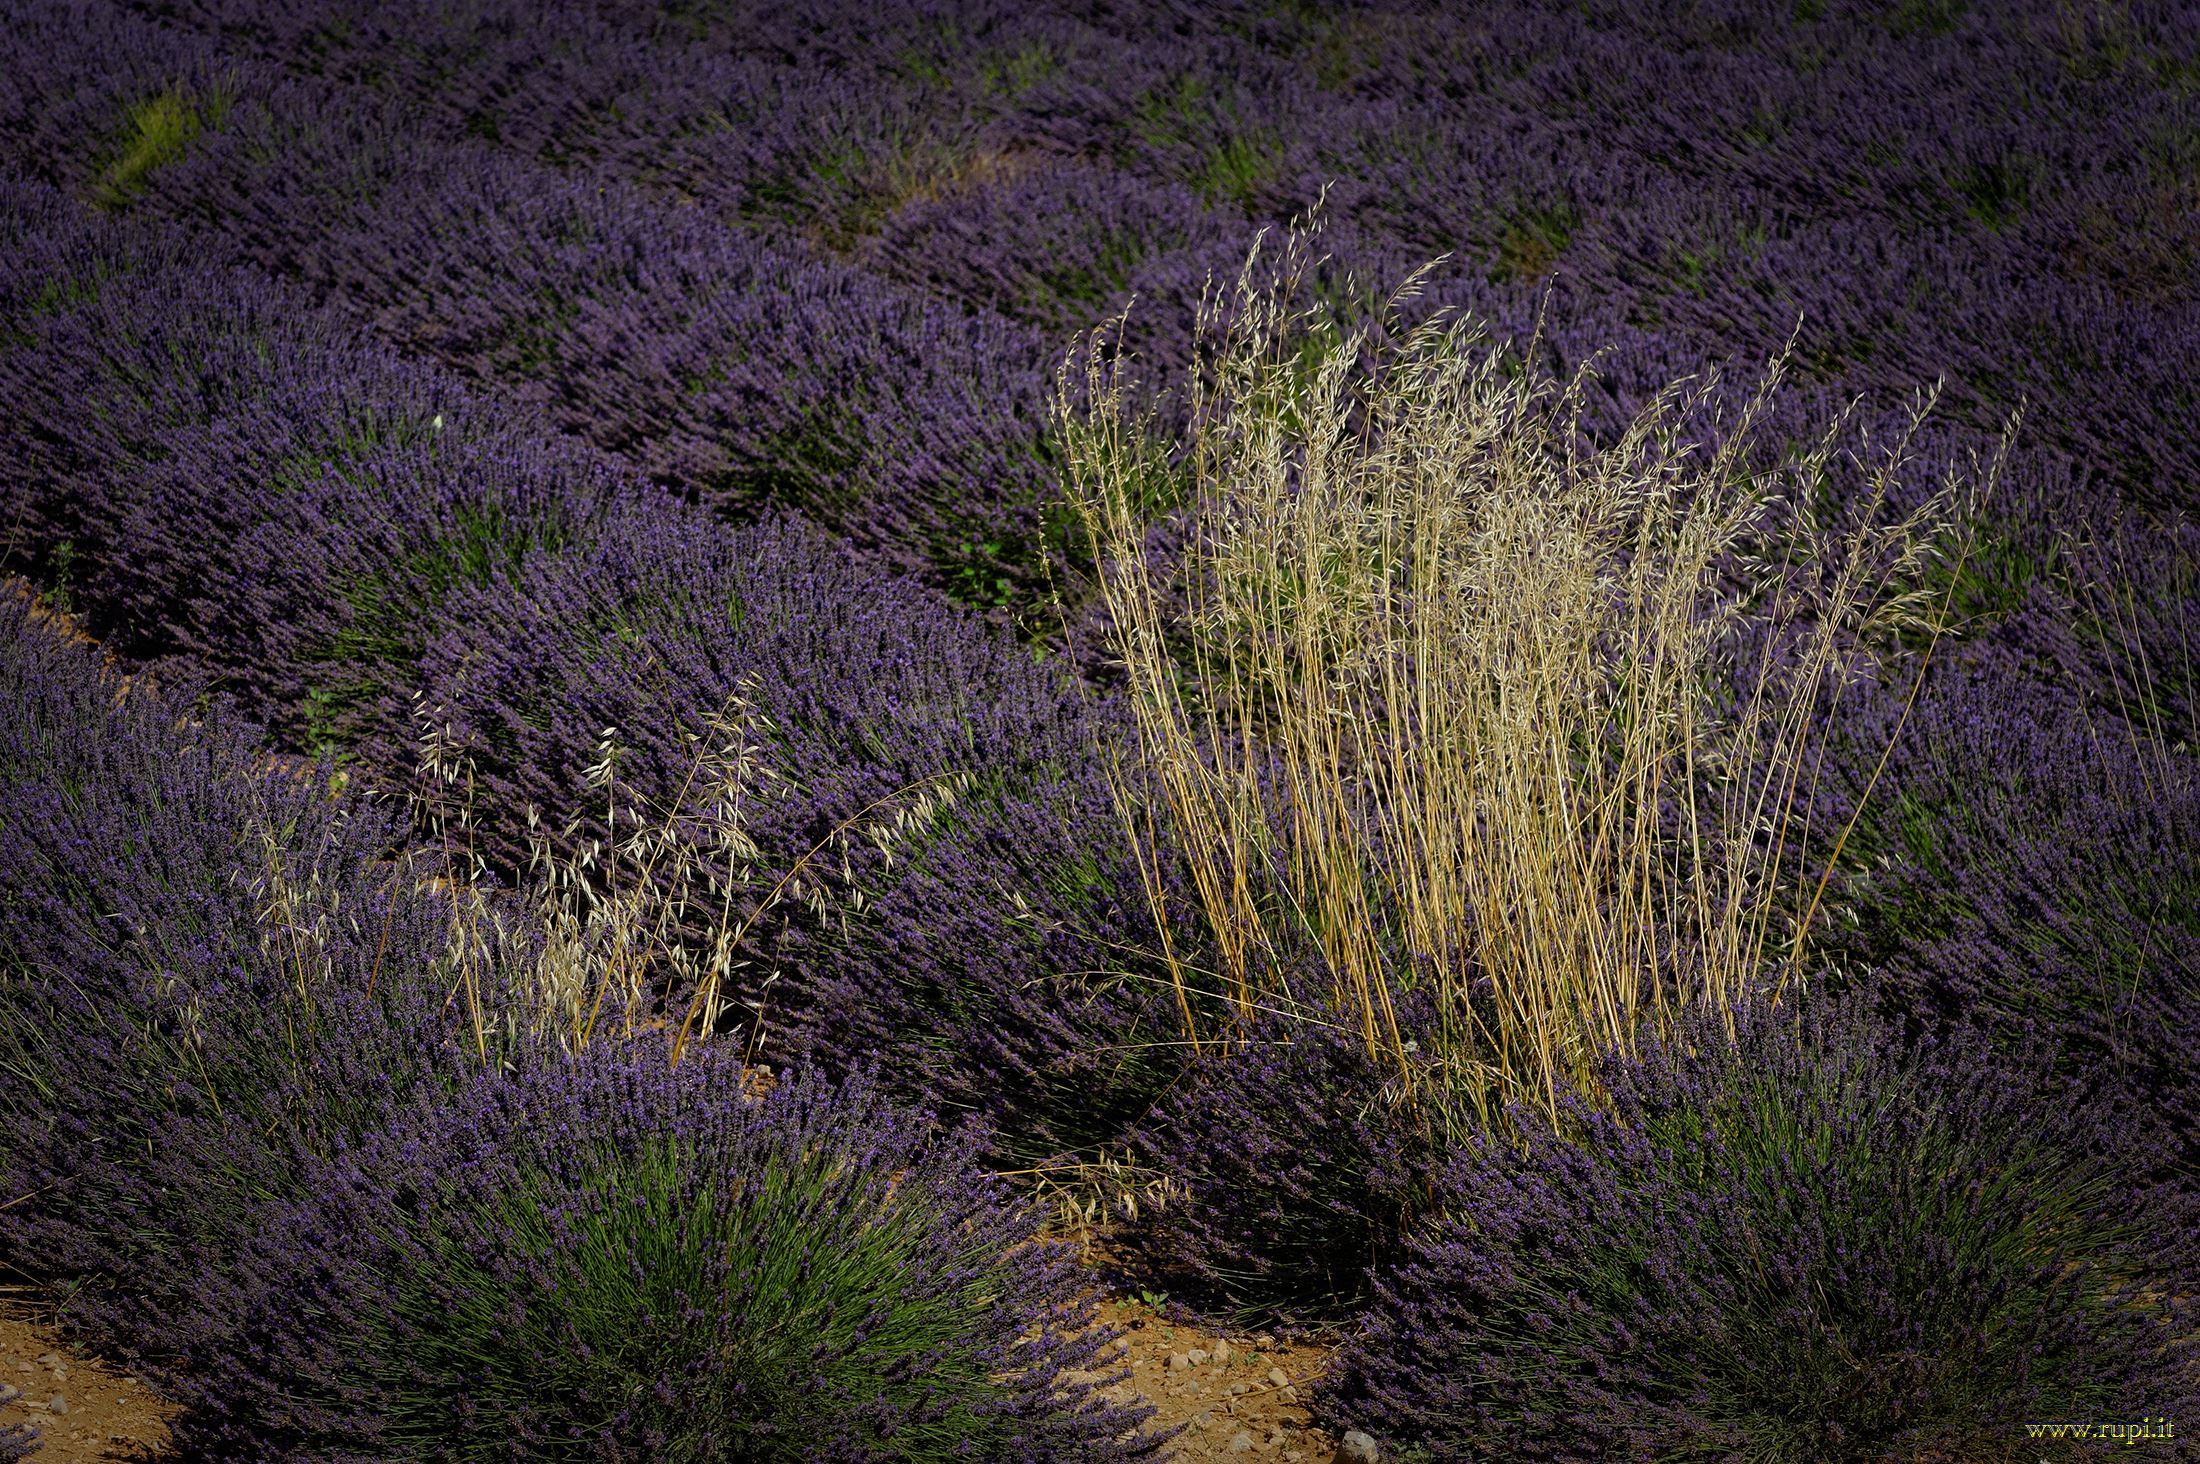 Variations between the lavender...